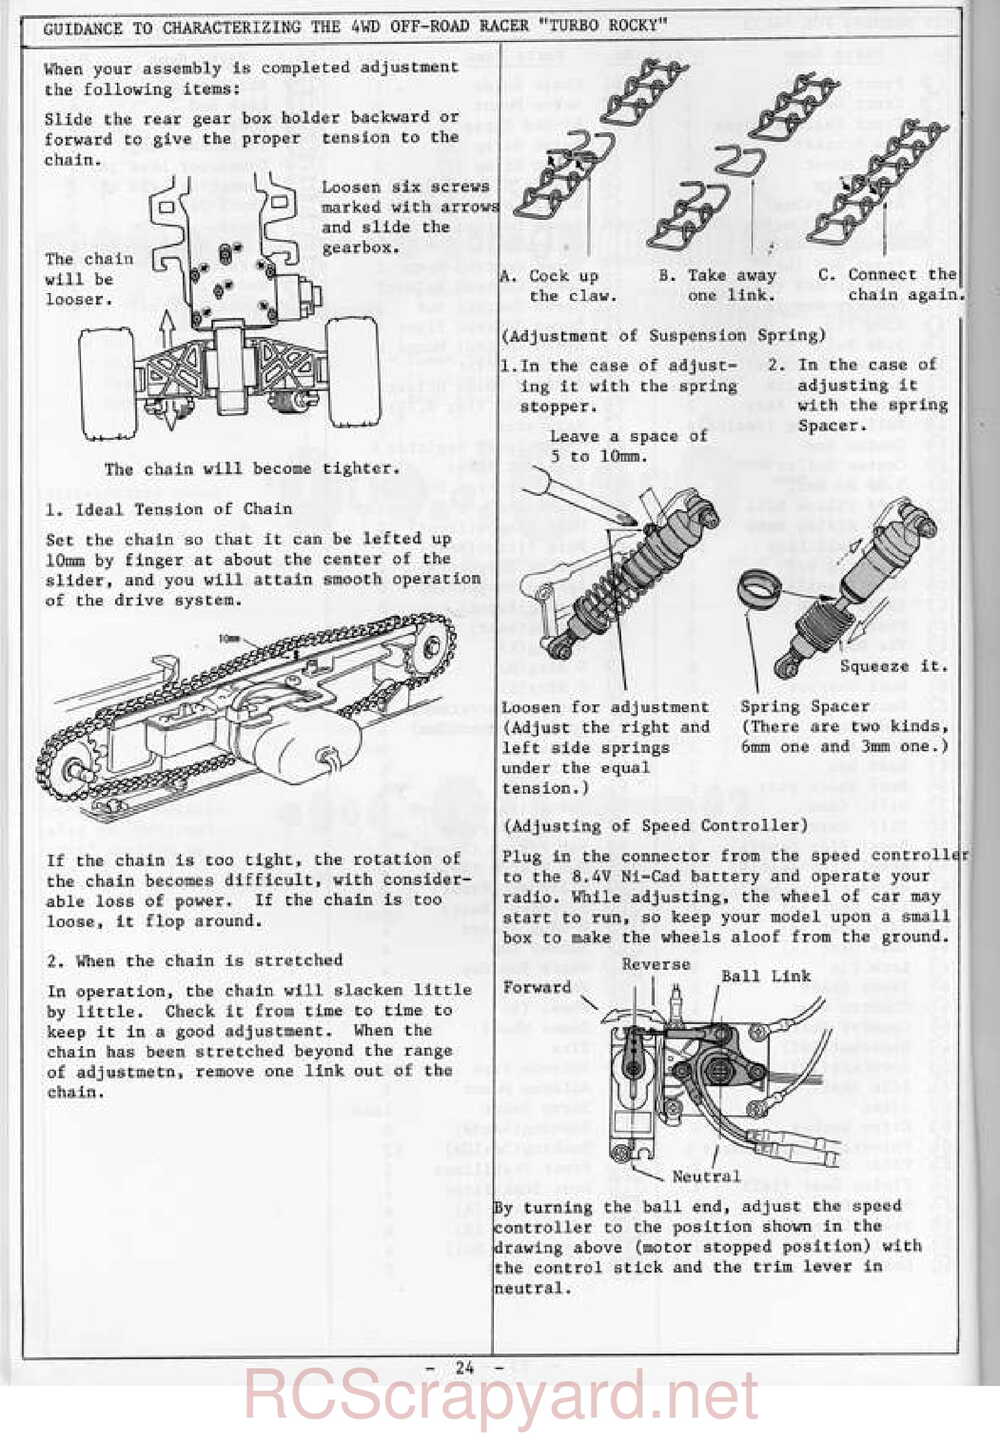 Kyosho - 3103 - Turbo-Rocky - Manual - Page 24